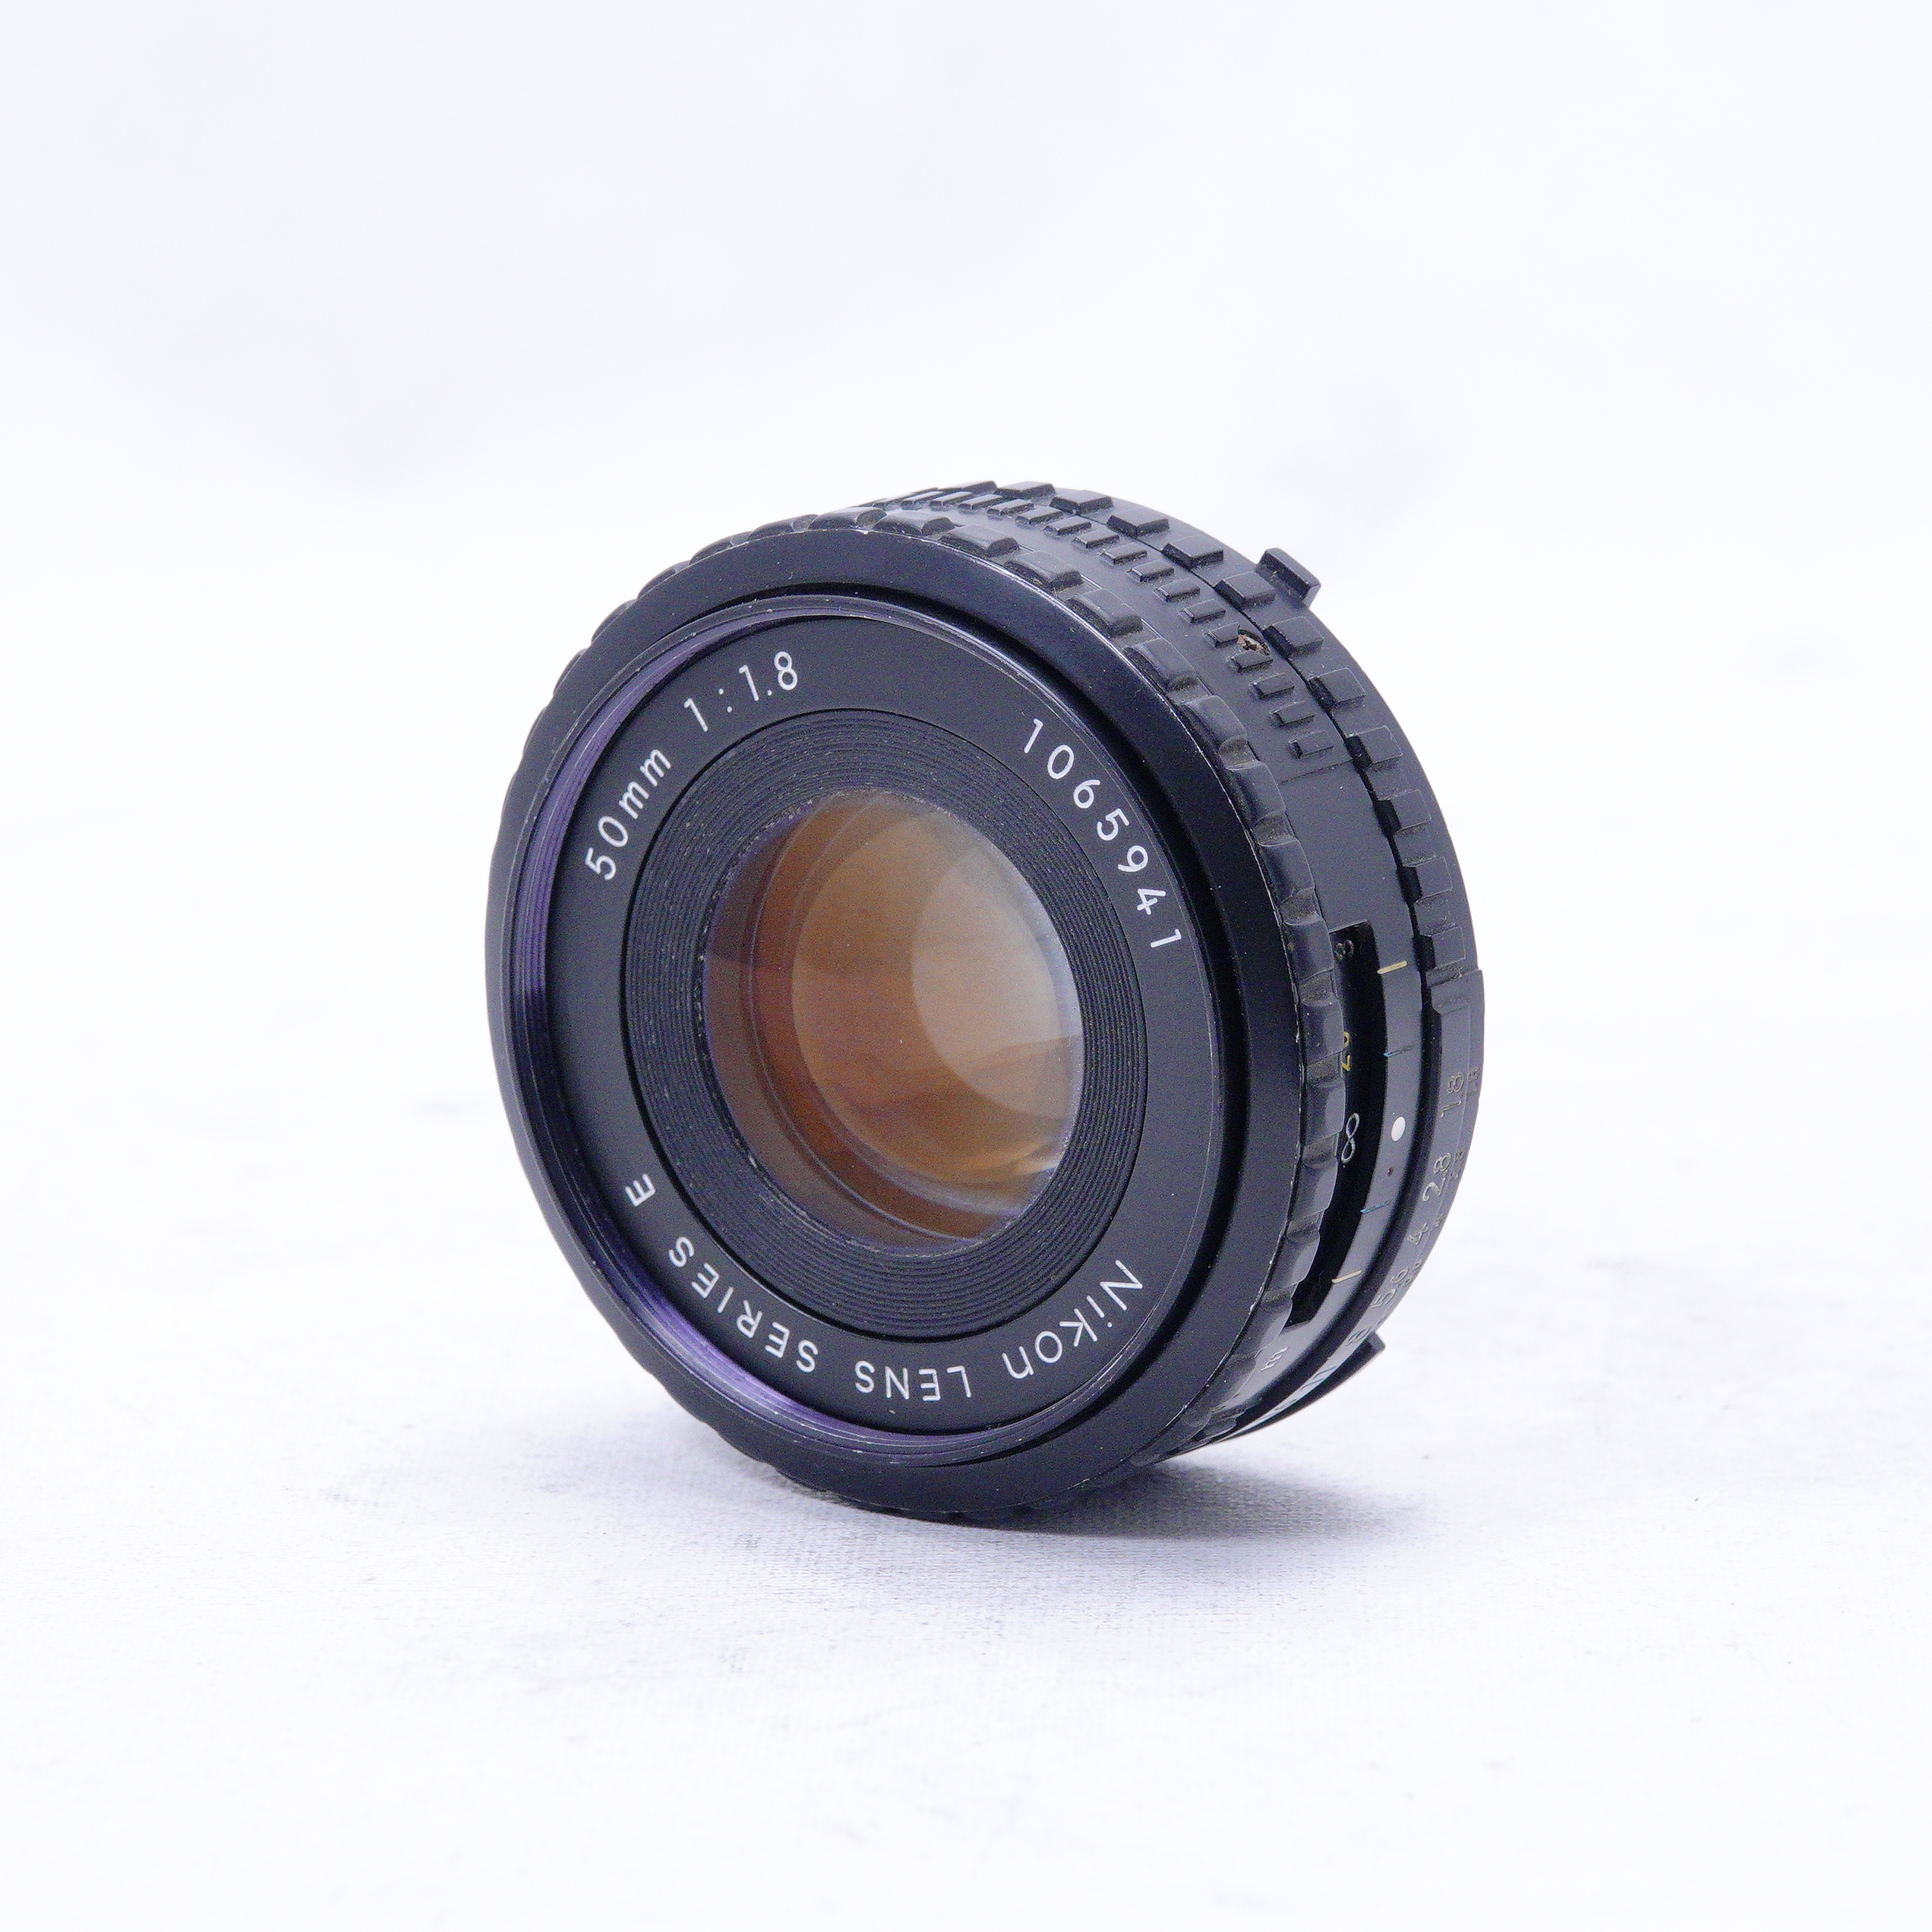 Nikon 50 mm f/1.8 Series E AIS Lens (Pancake estilo) - Usado